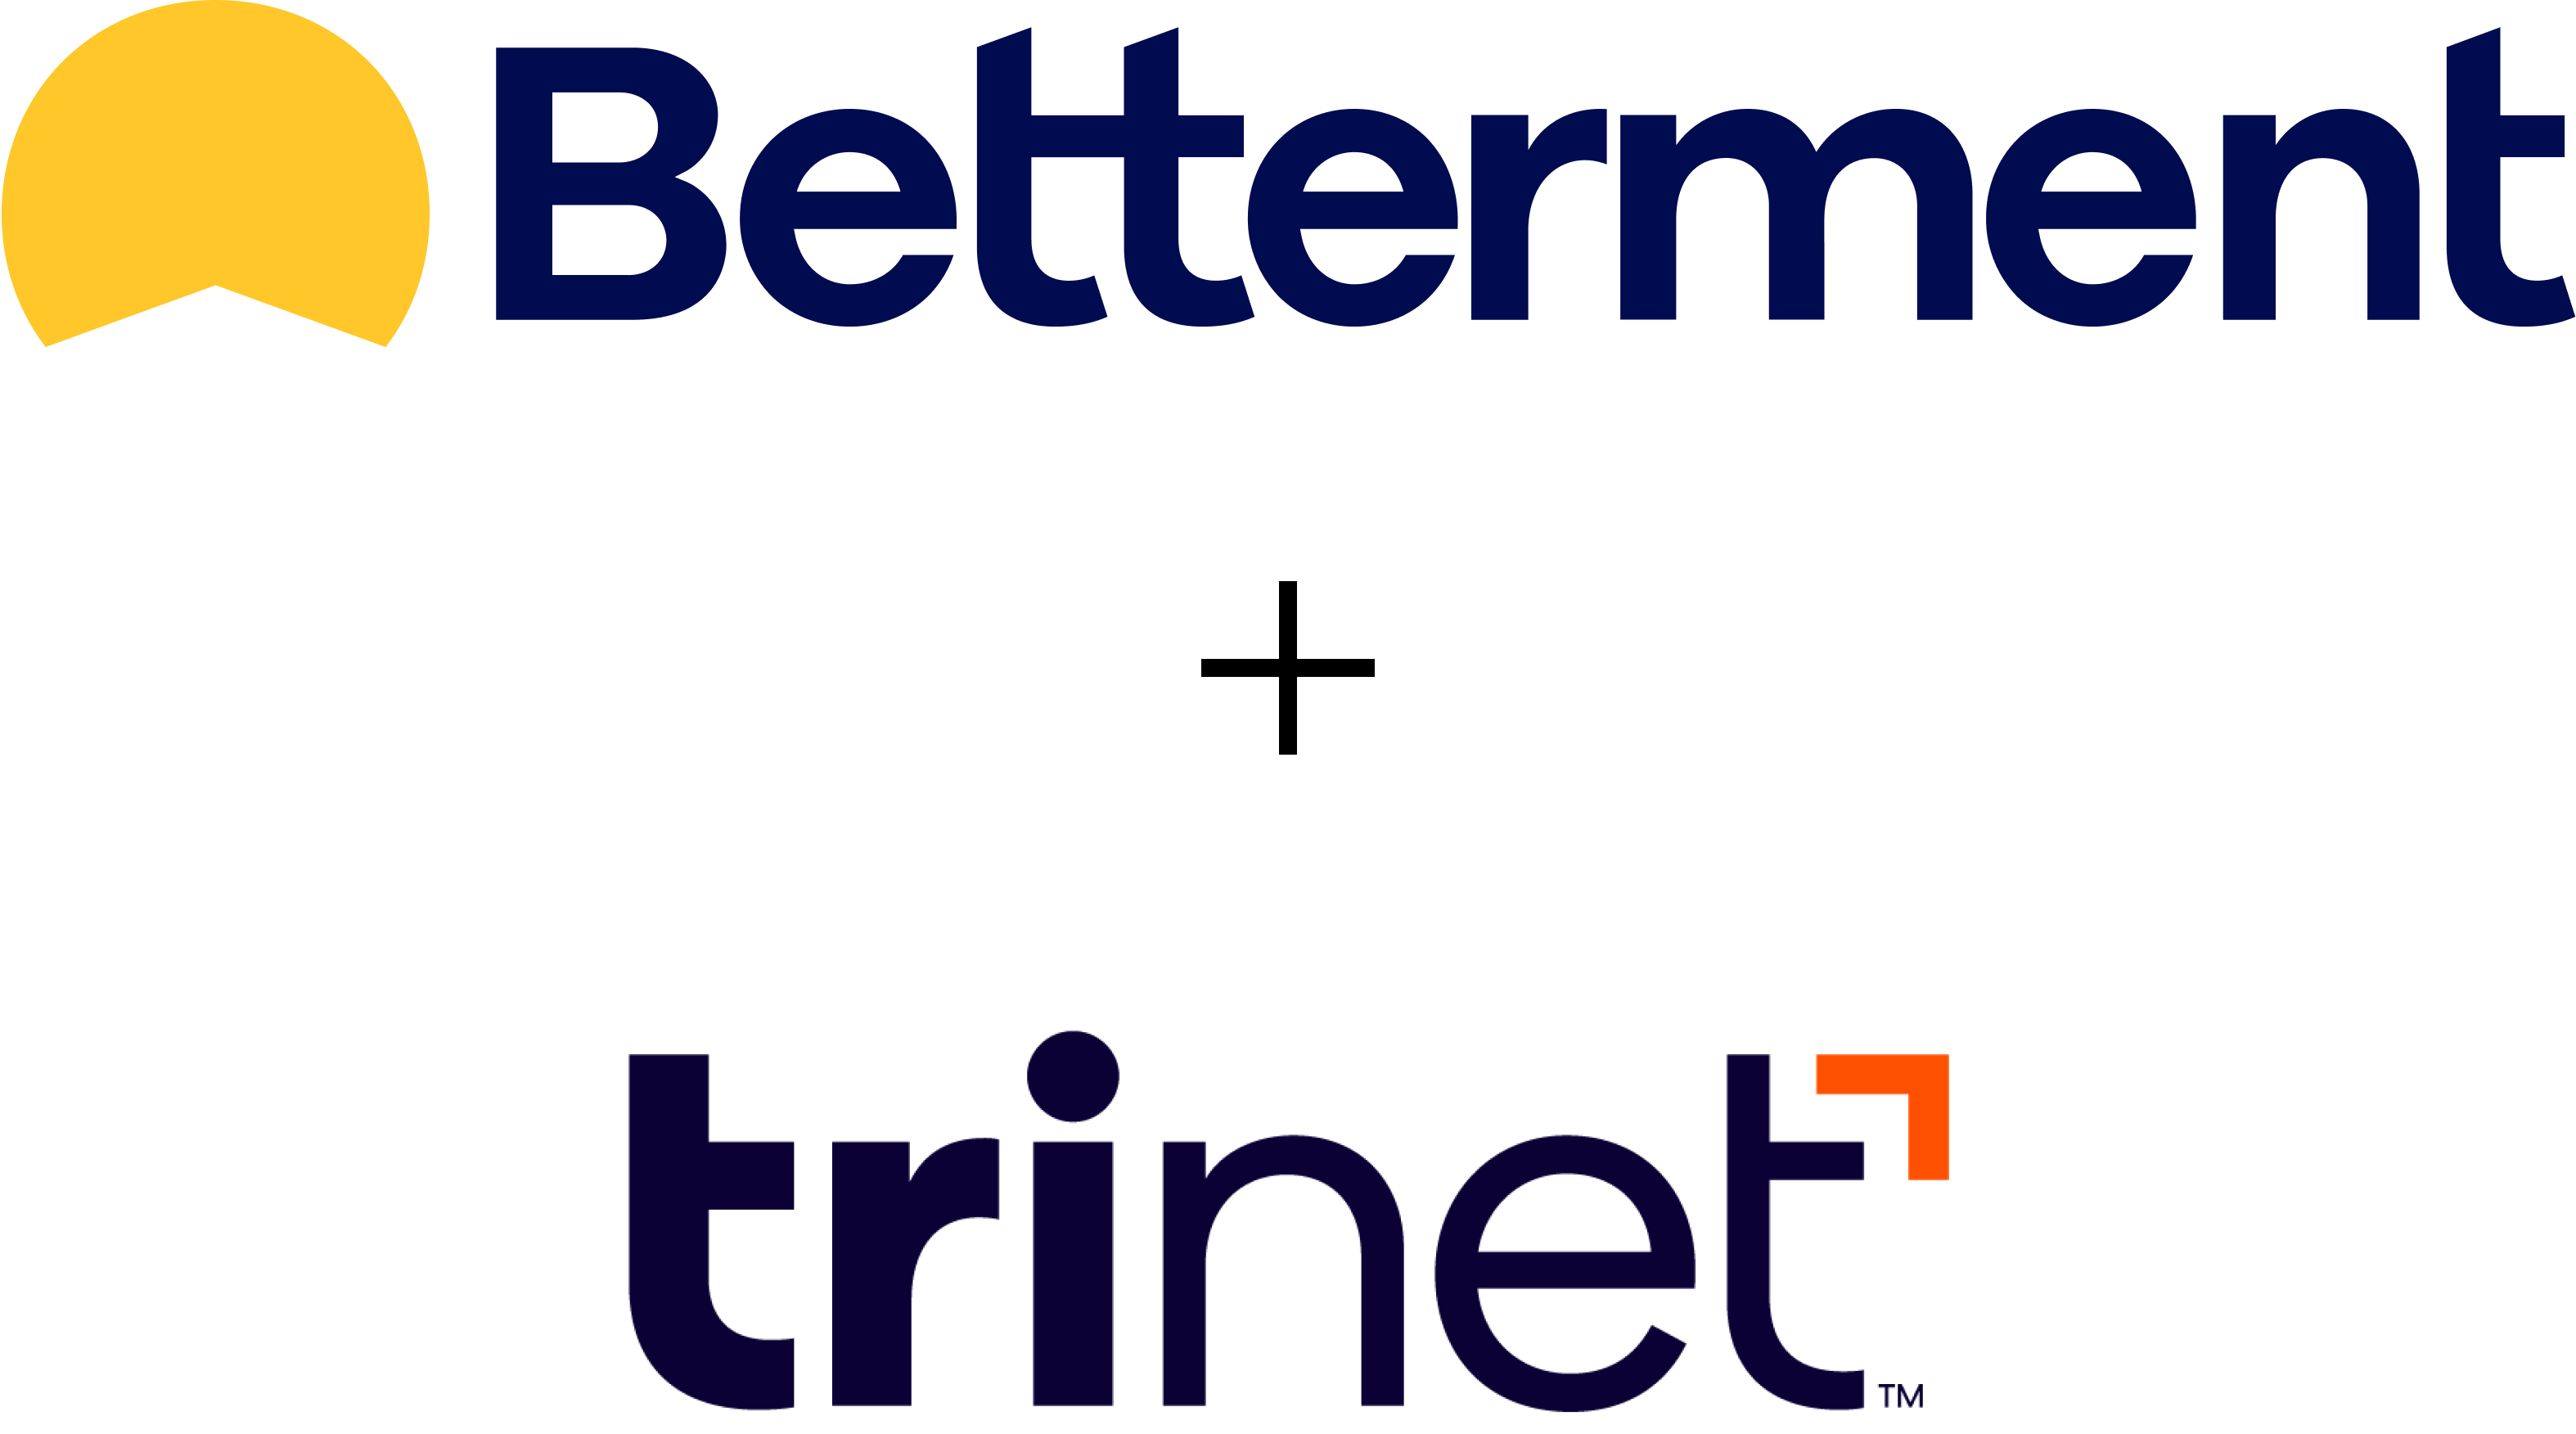 Betterment logo and Trinet logo.